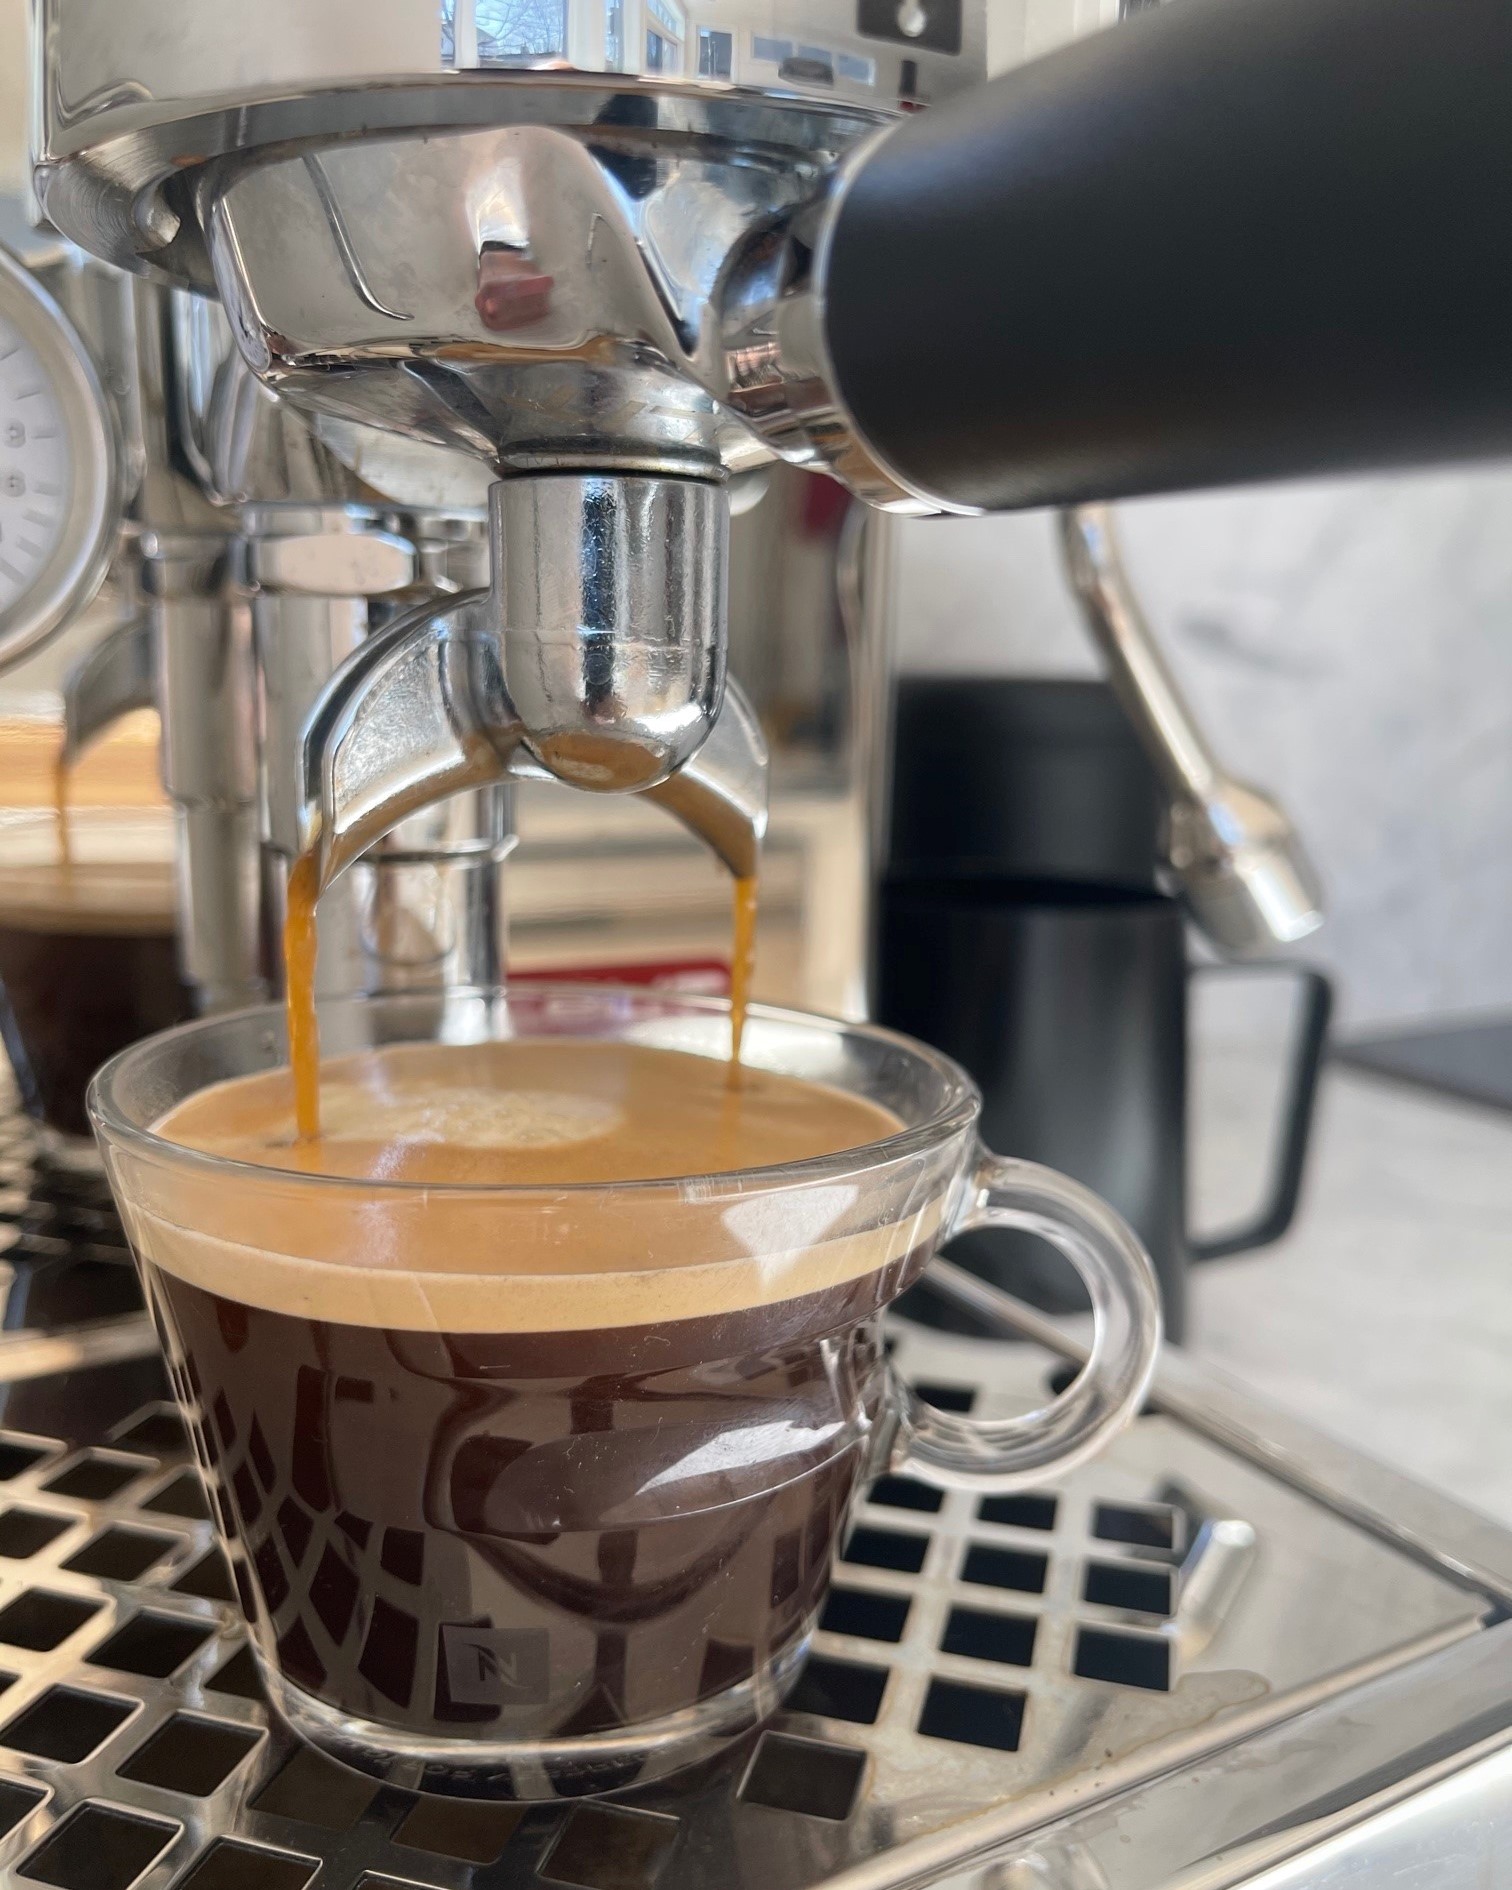 Machines à café automatiques Bellucci – Ma Caféine